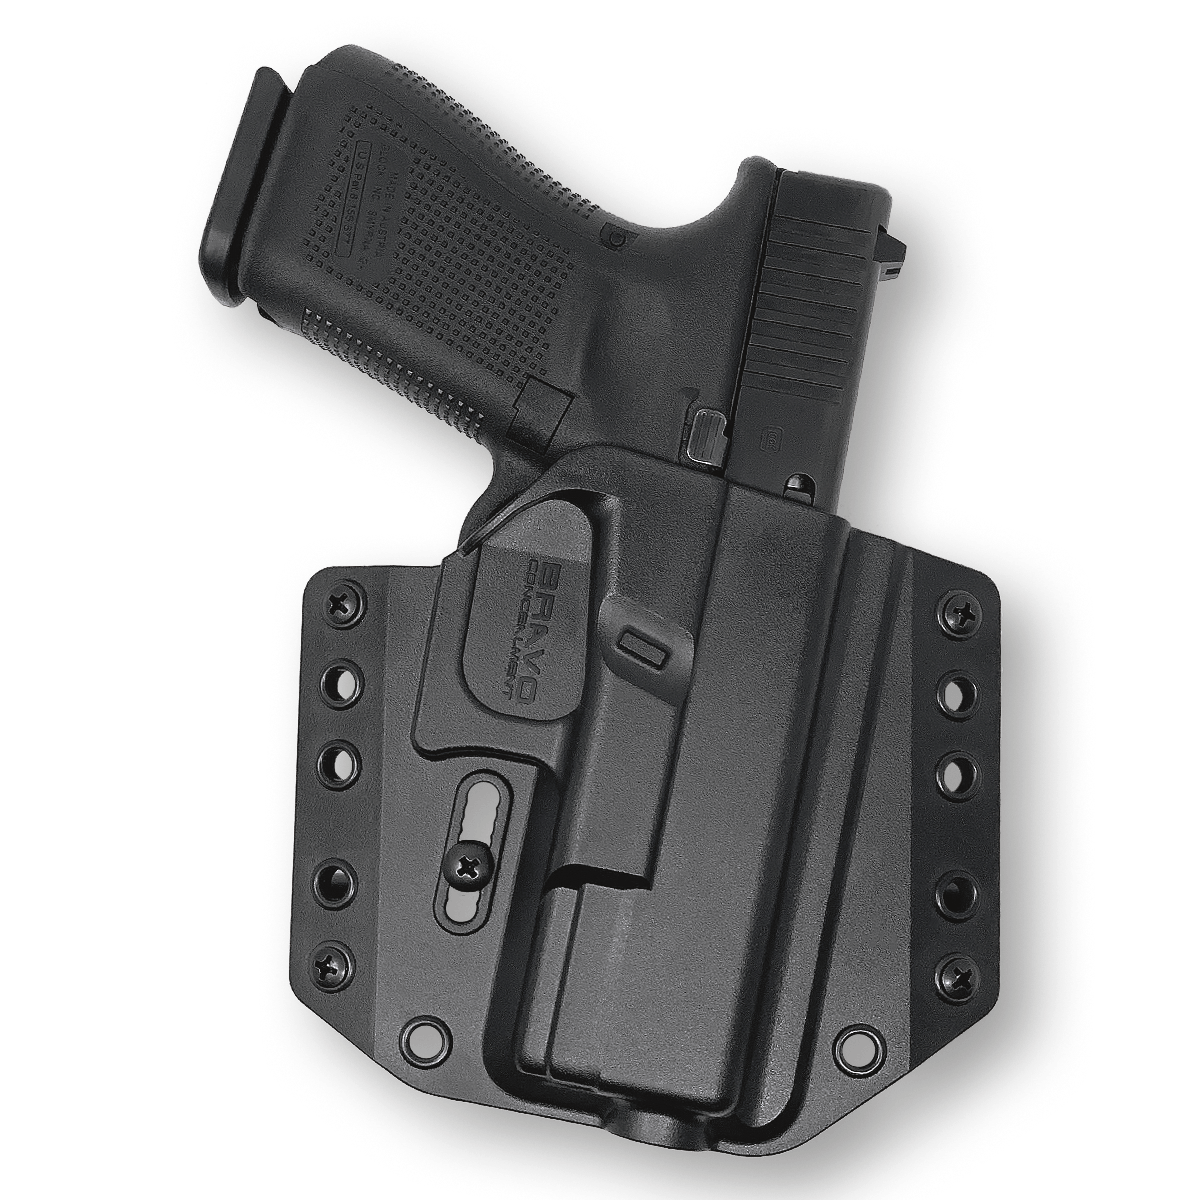 NEW HAND GUN ELASTIC WAIST BAND CONCEALMENT PISTOL HOLSTER 2 MAG